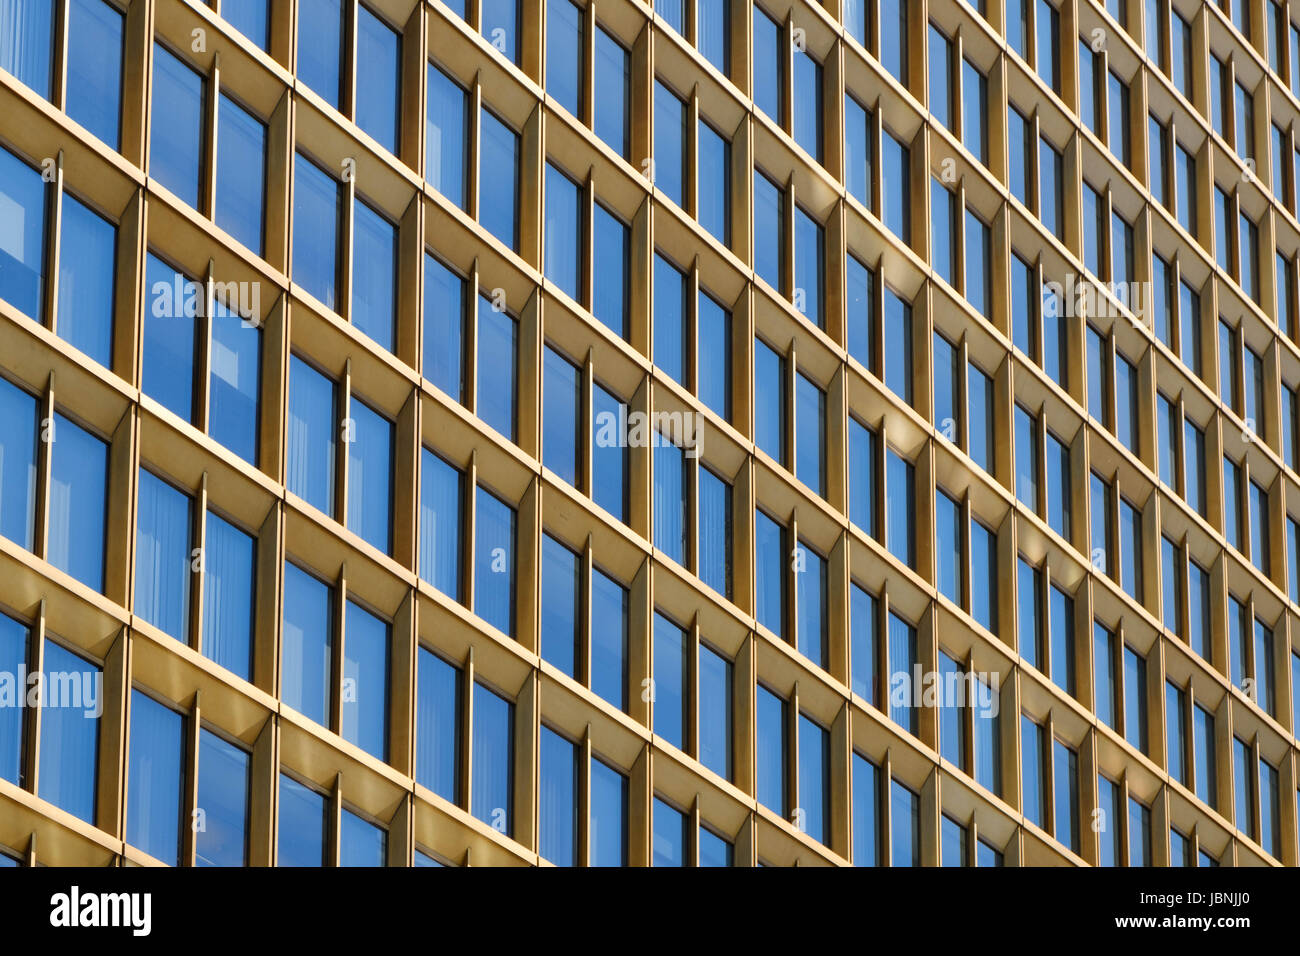 skyscraper building exterior - window facade / architectural pattern Stock Photo